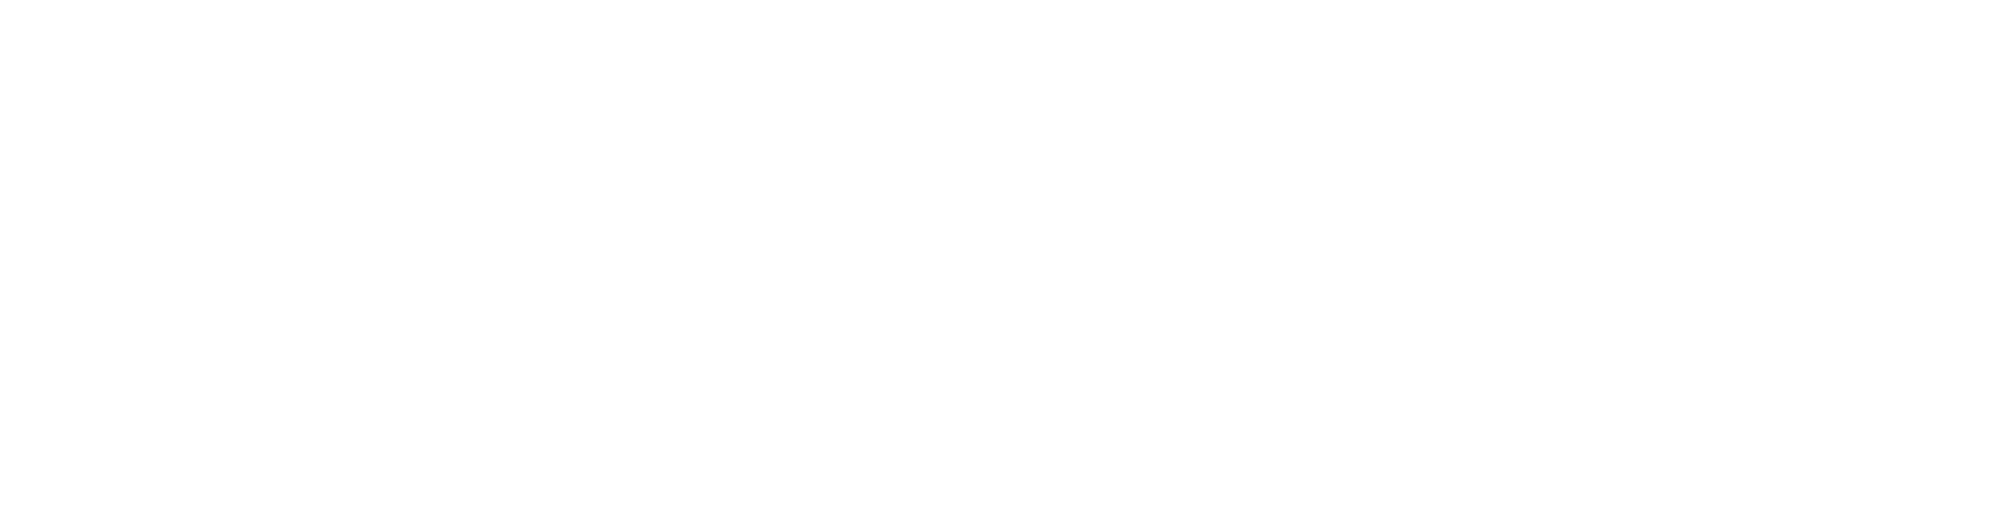 Bluewood mobile logo